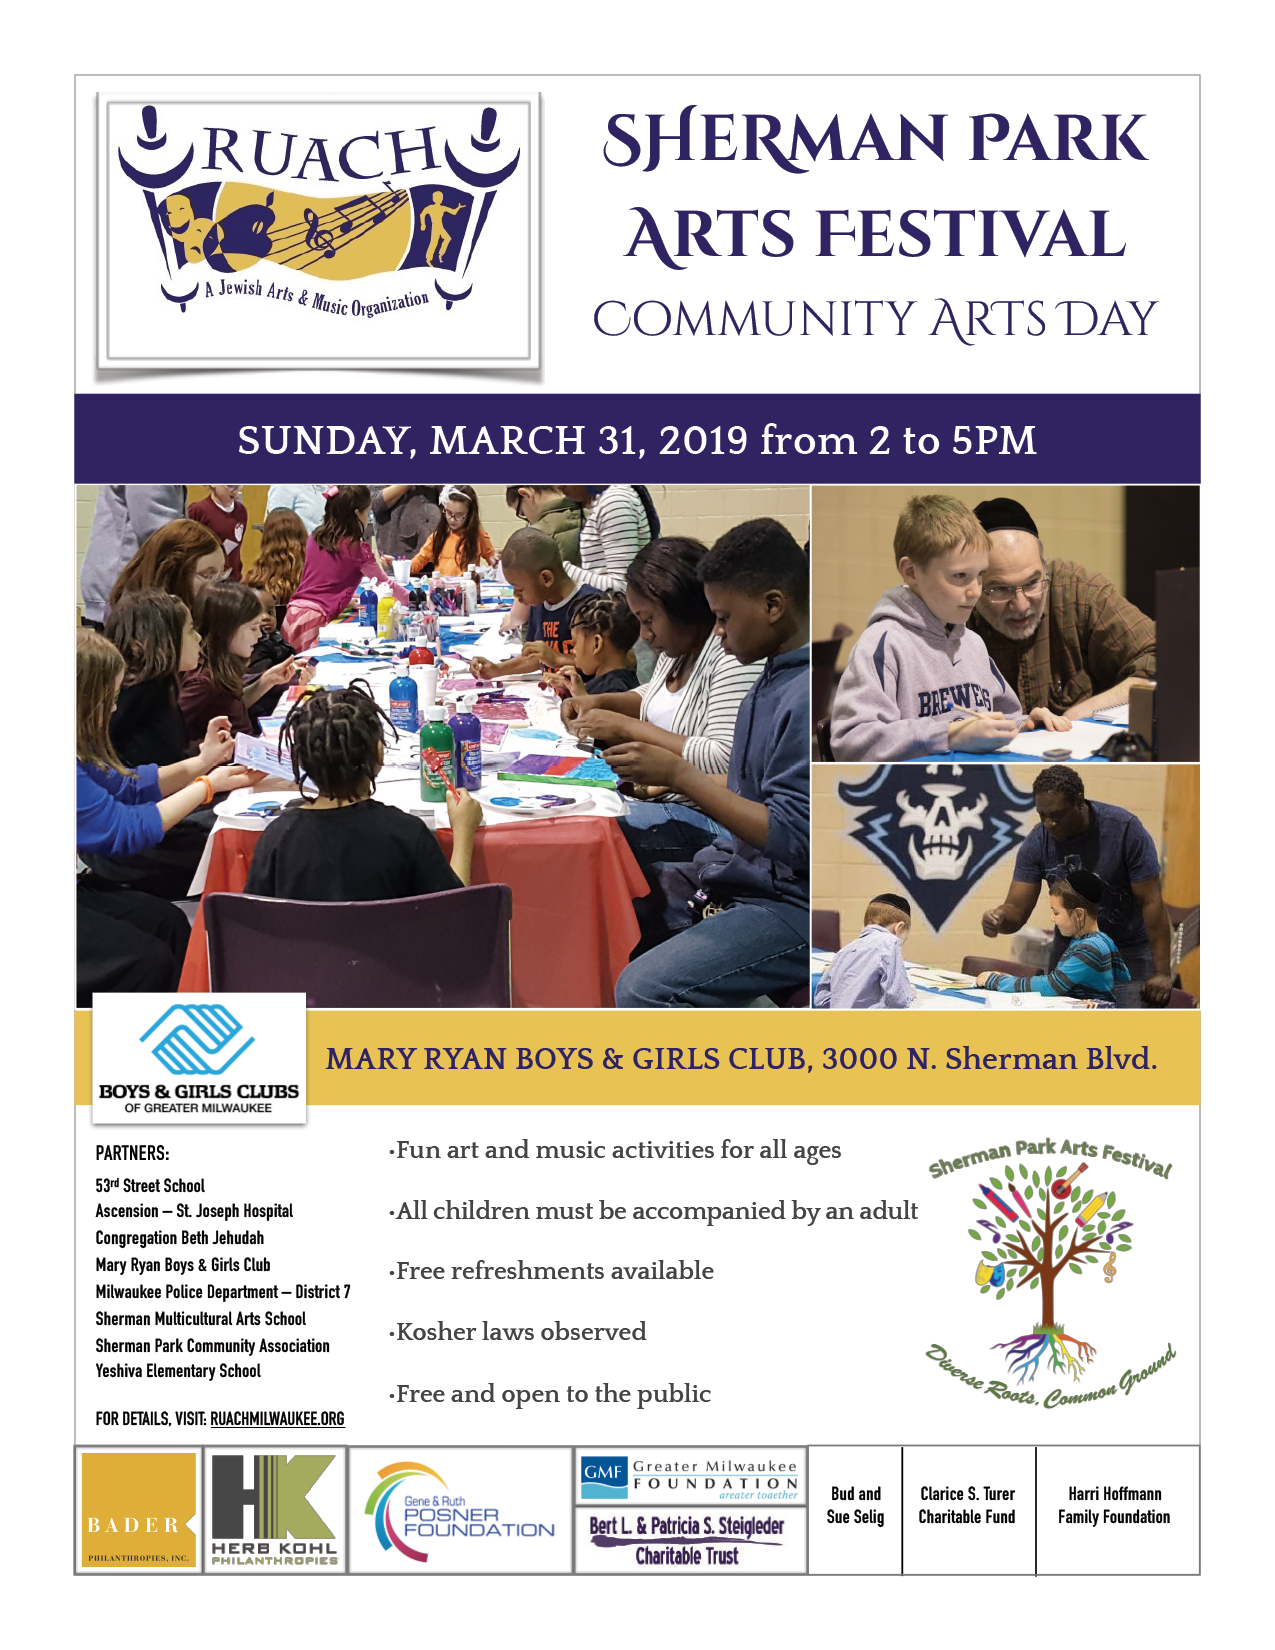 2019 Sherman Park Arts Festival Community Arts Day Ruach Inc.